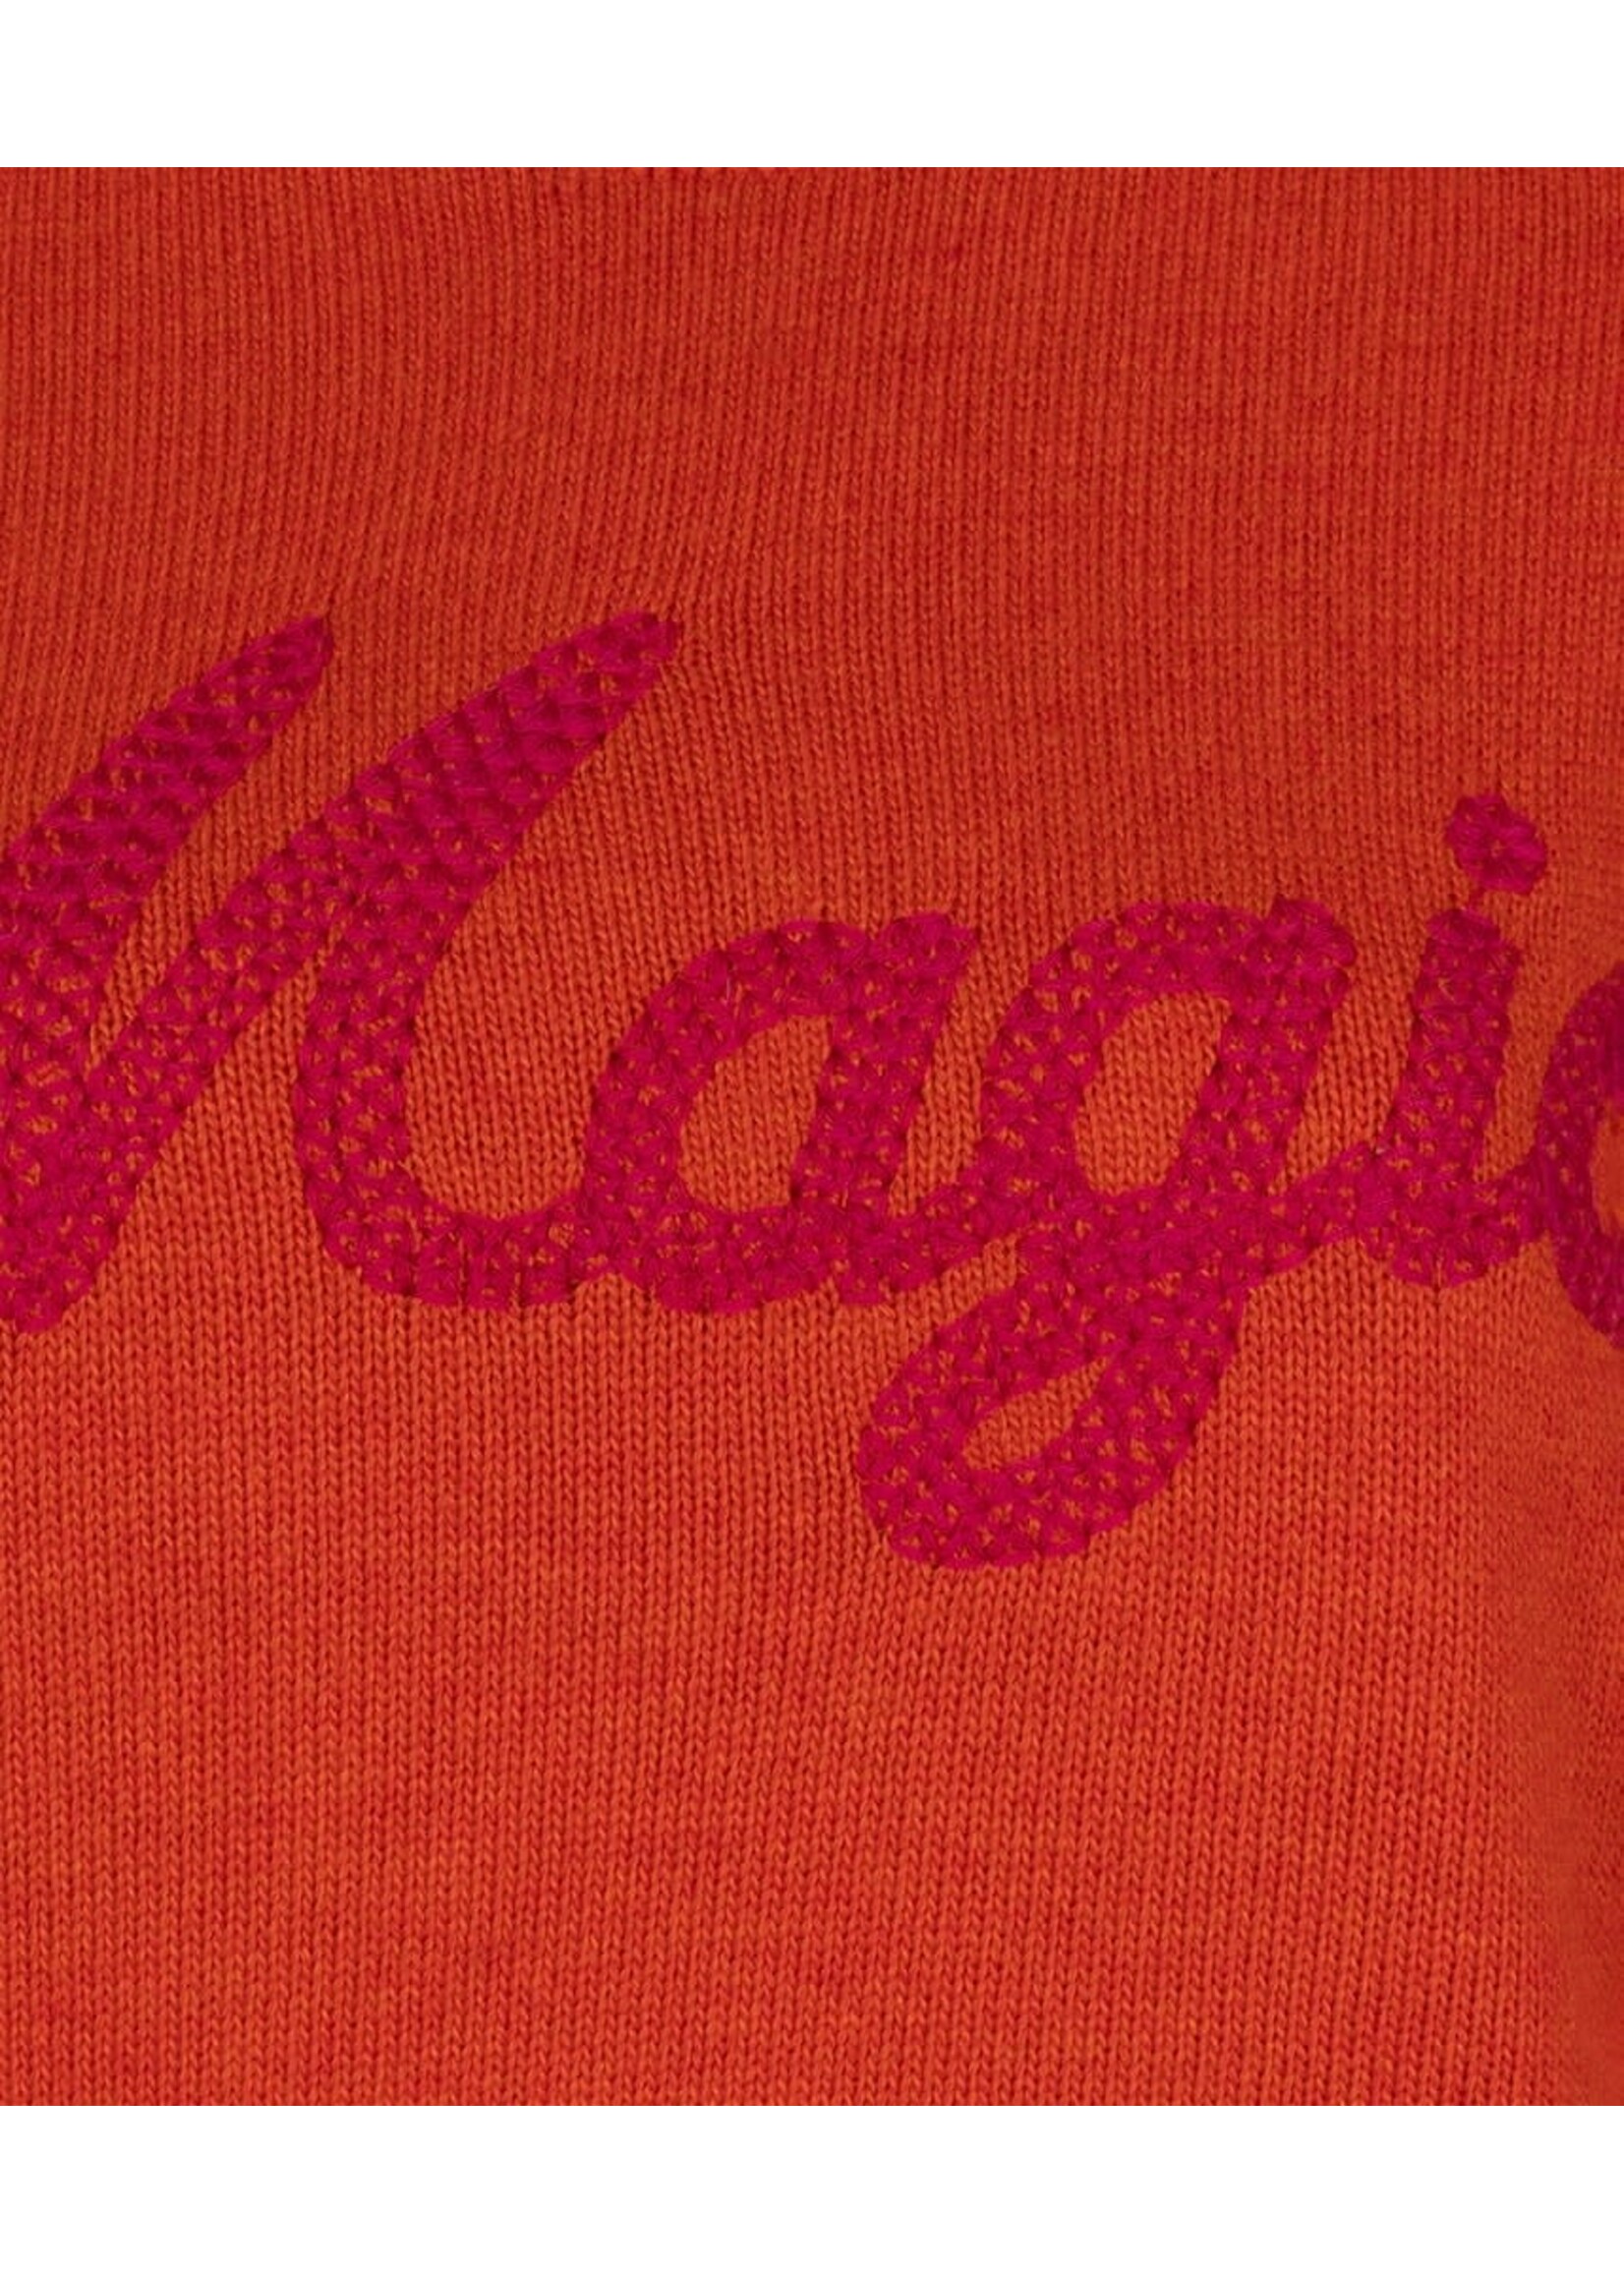 Esqualo Sweater “Magic” intarsia Oranje